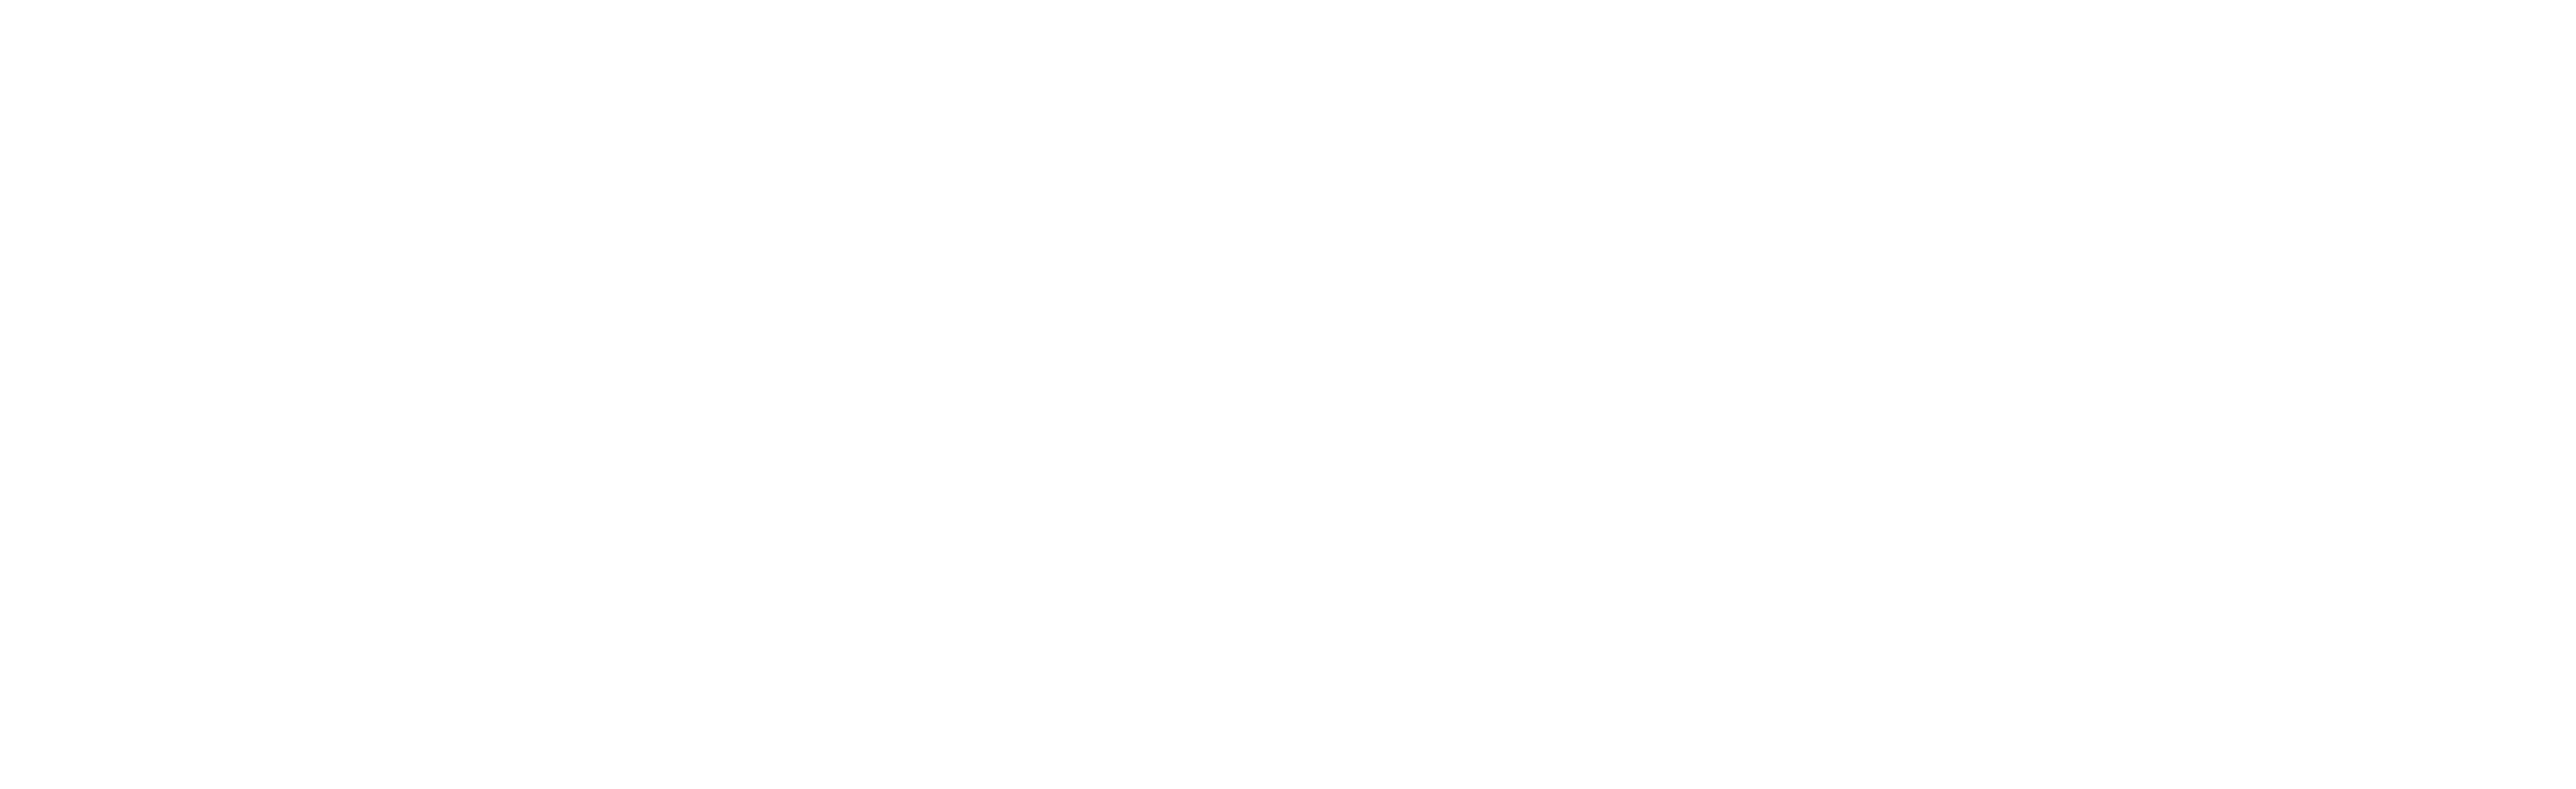 Homepage Bistum Augsburg